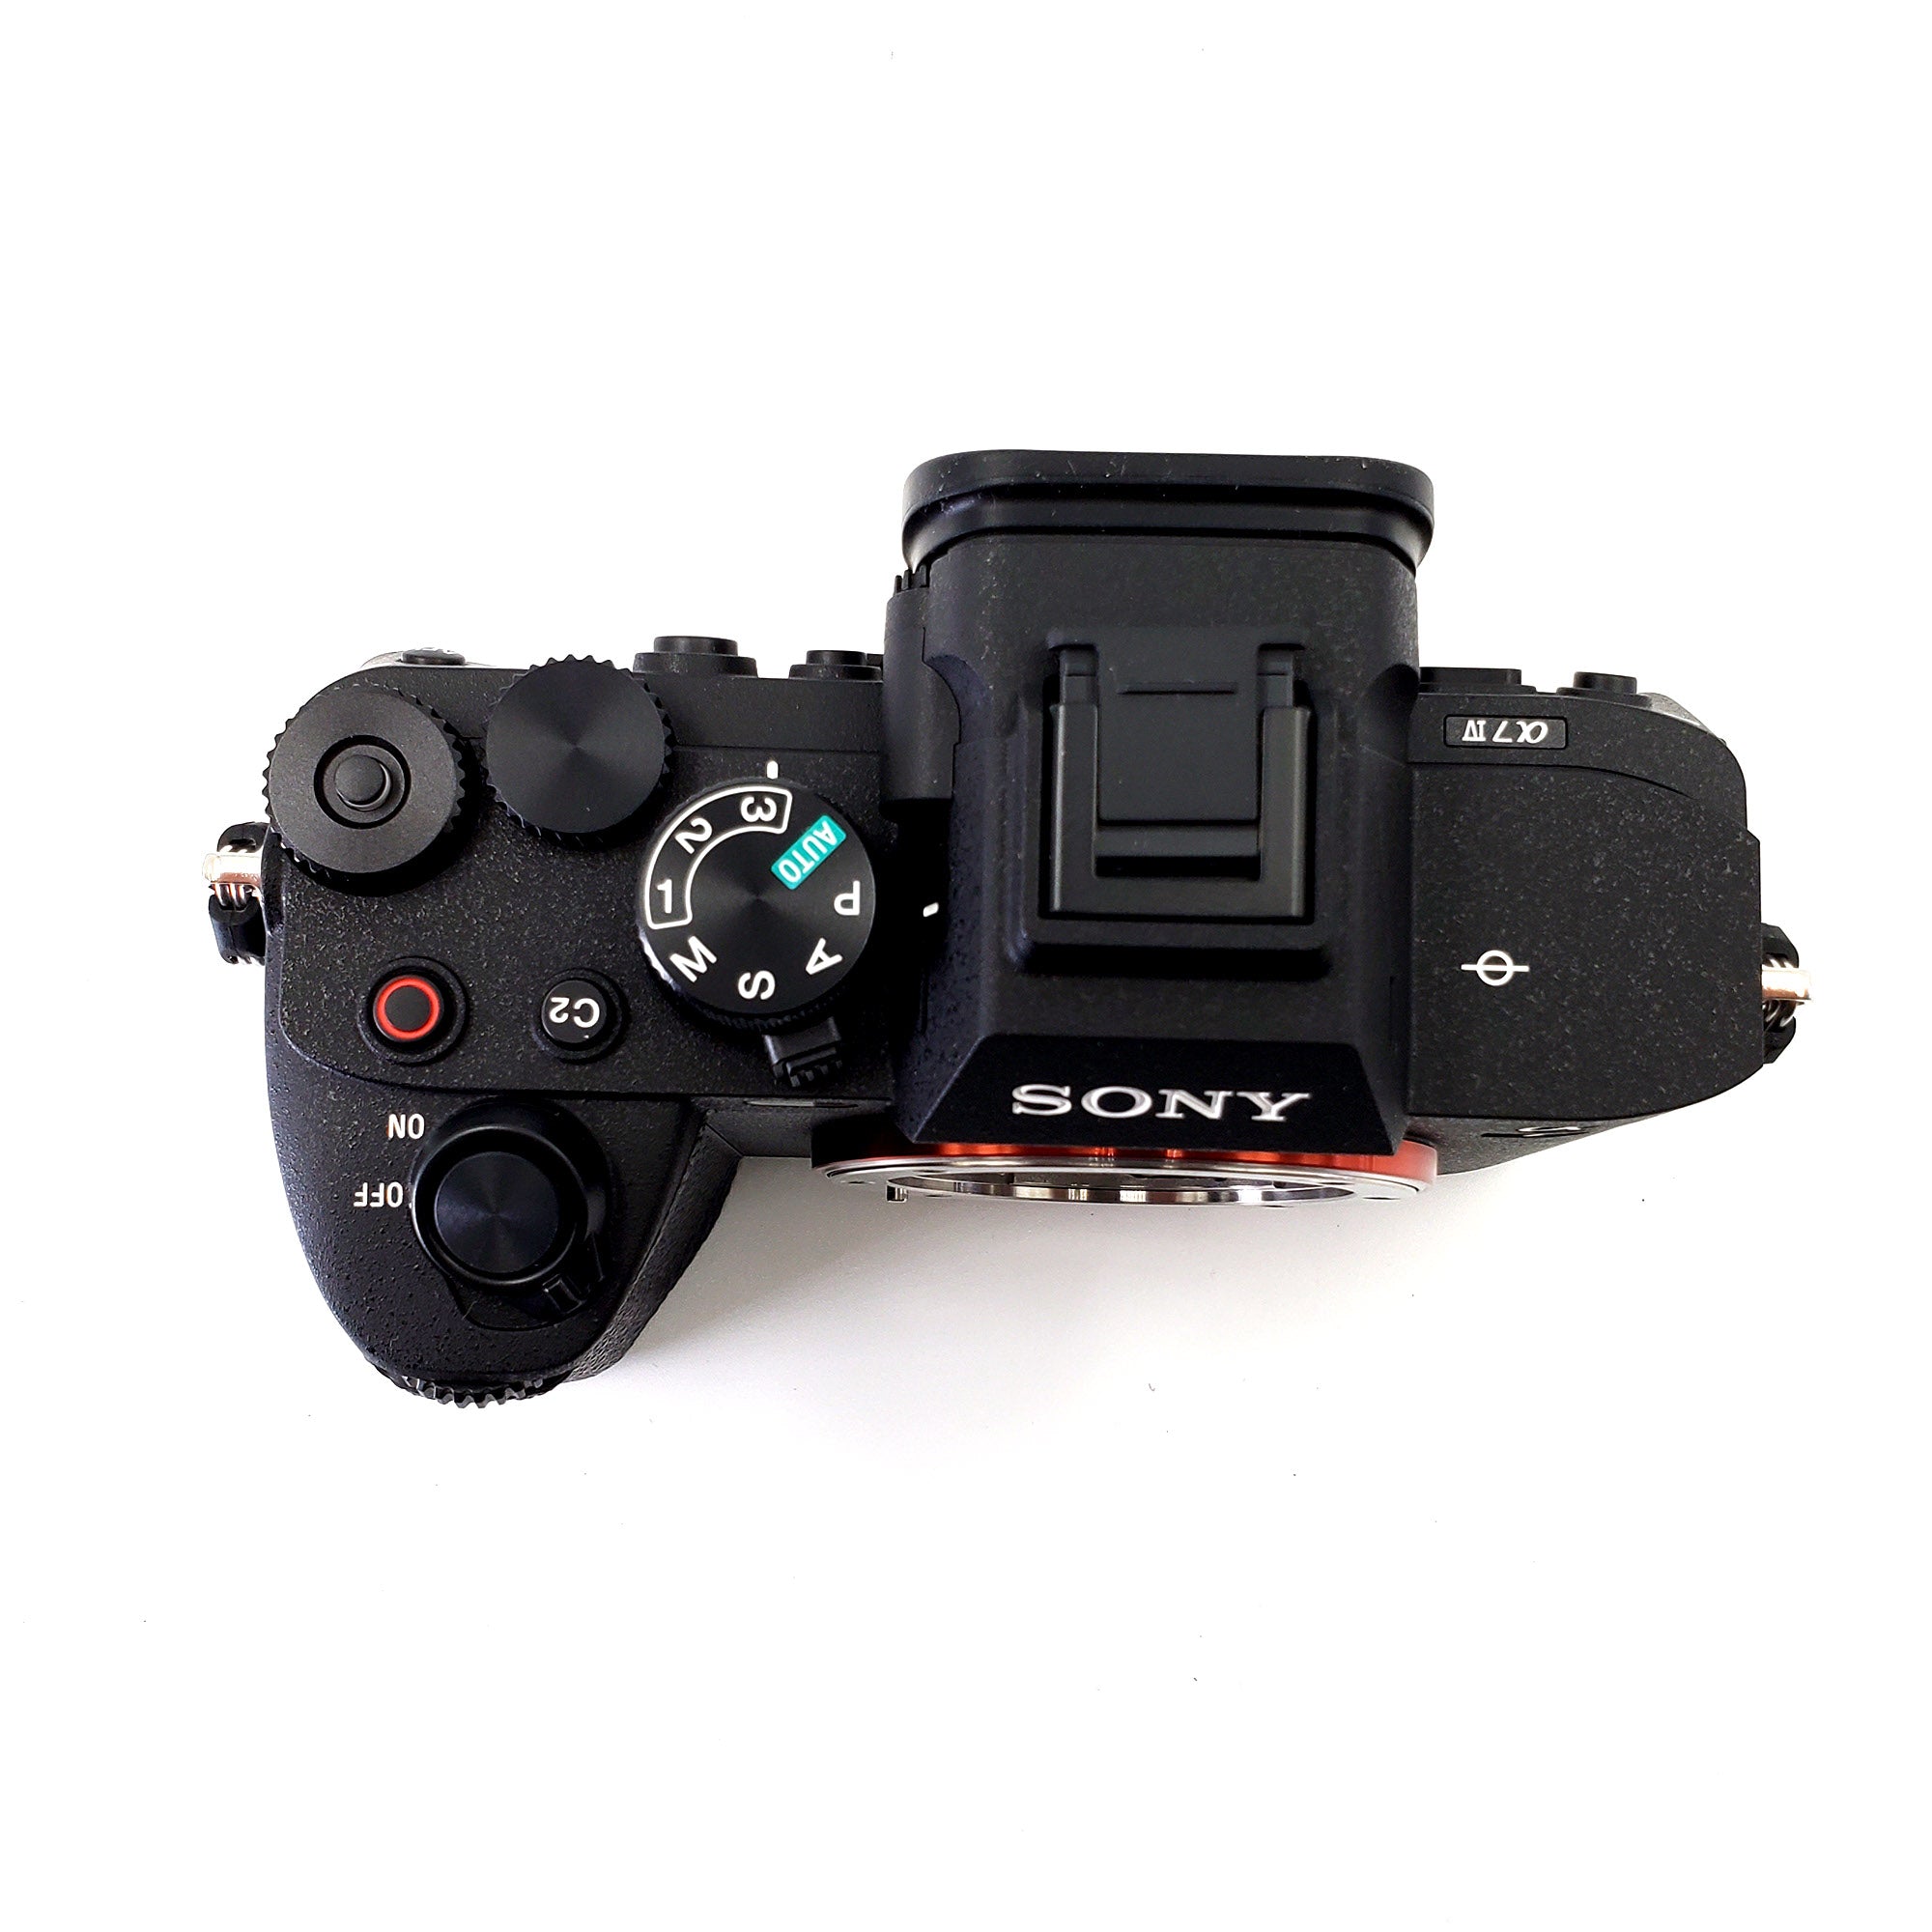 Sony Full Frame Alpha a7 IV Mirrorless Camera Kit